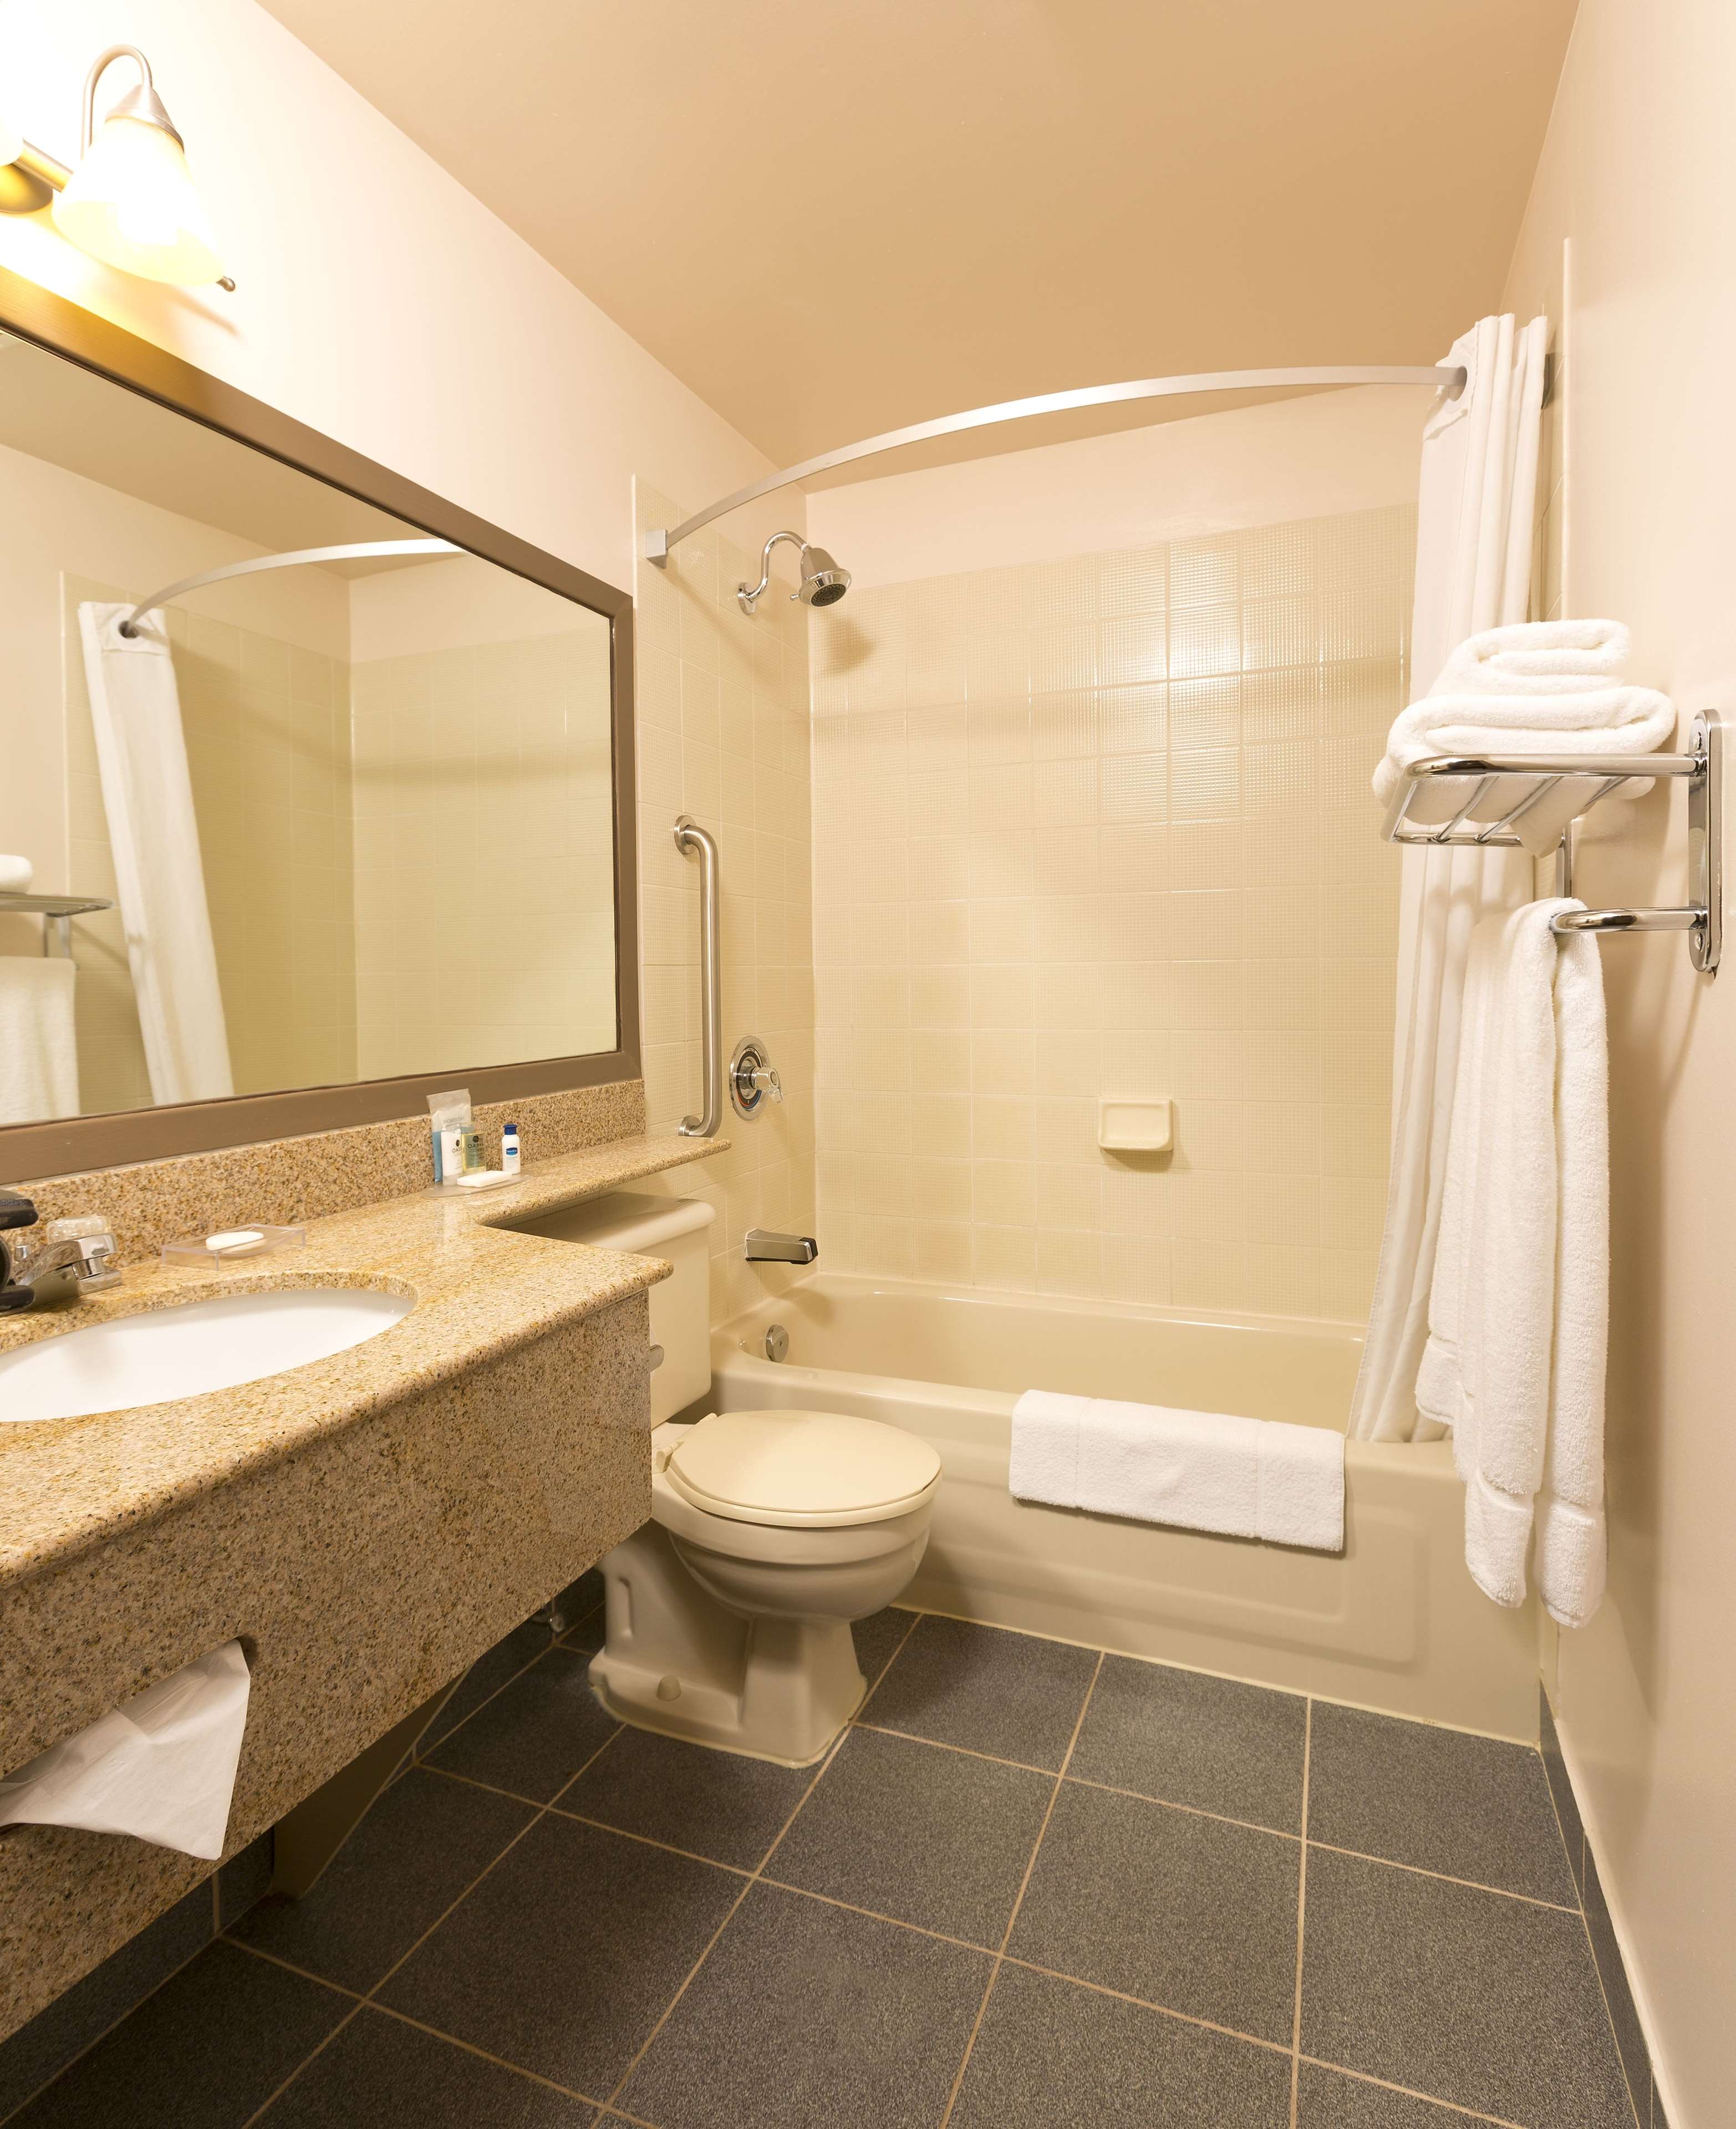 Bathroom Best Western Laval-Montreal Laval (450)681-9000